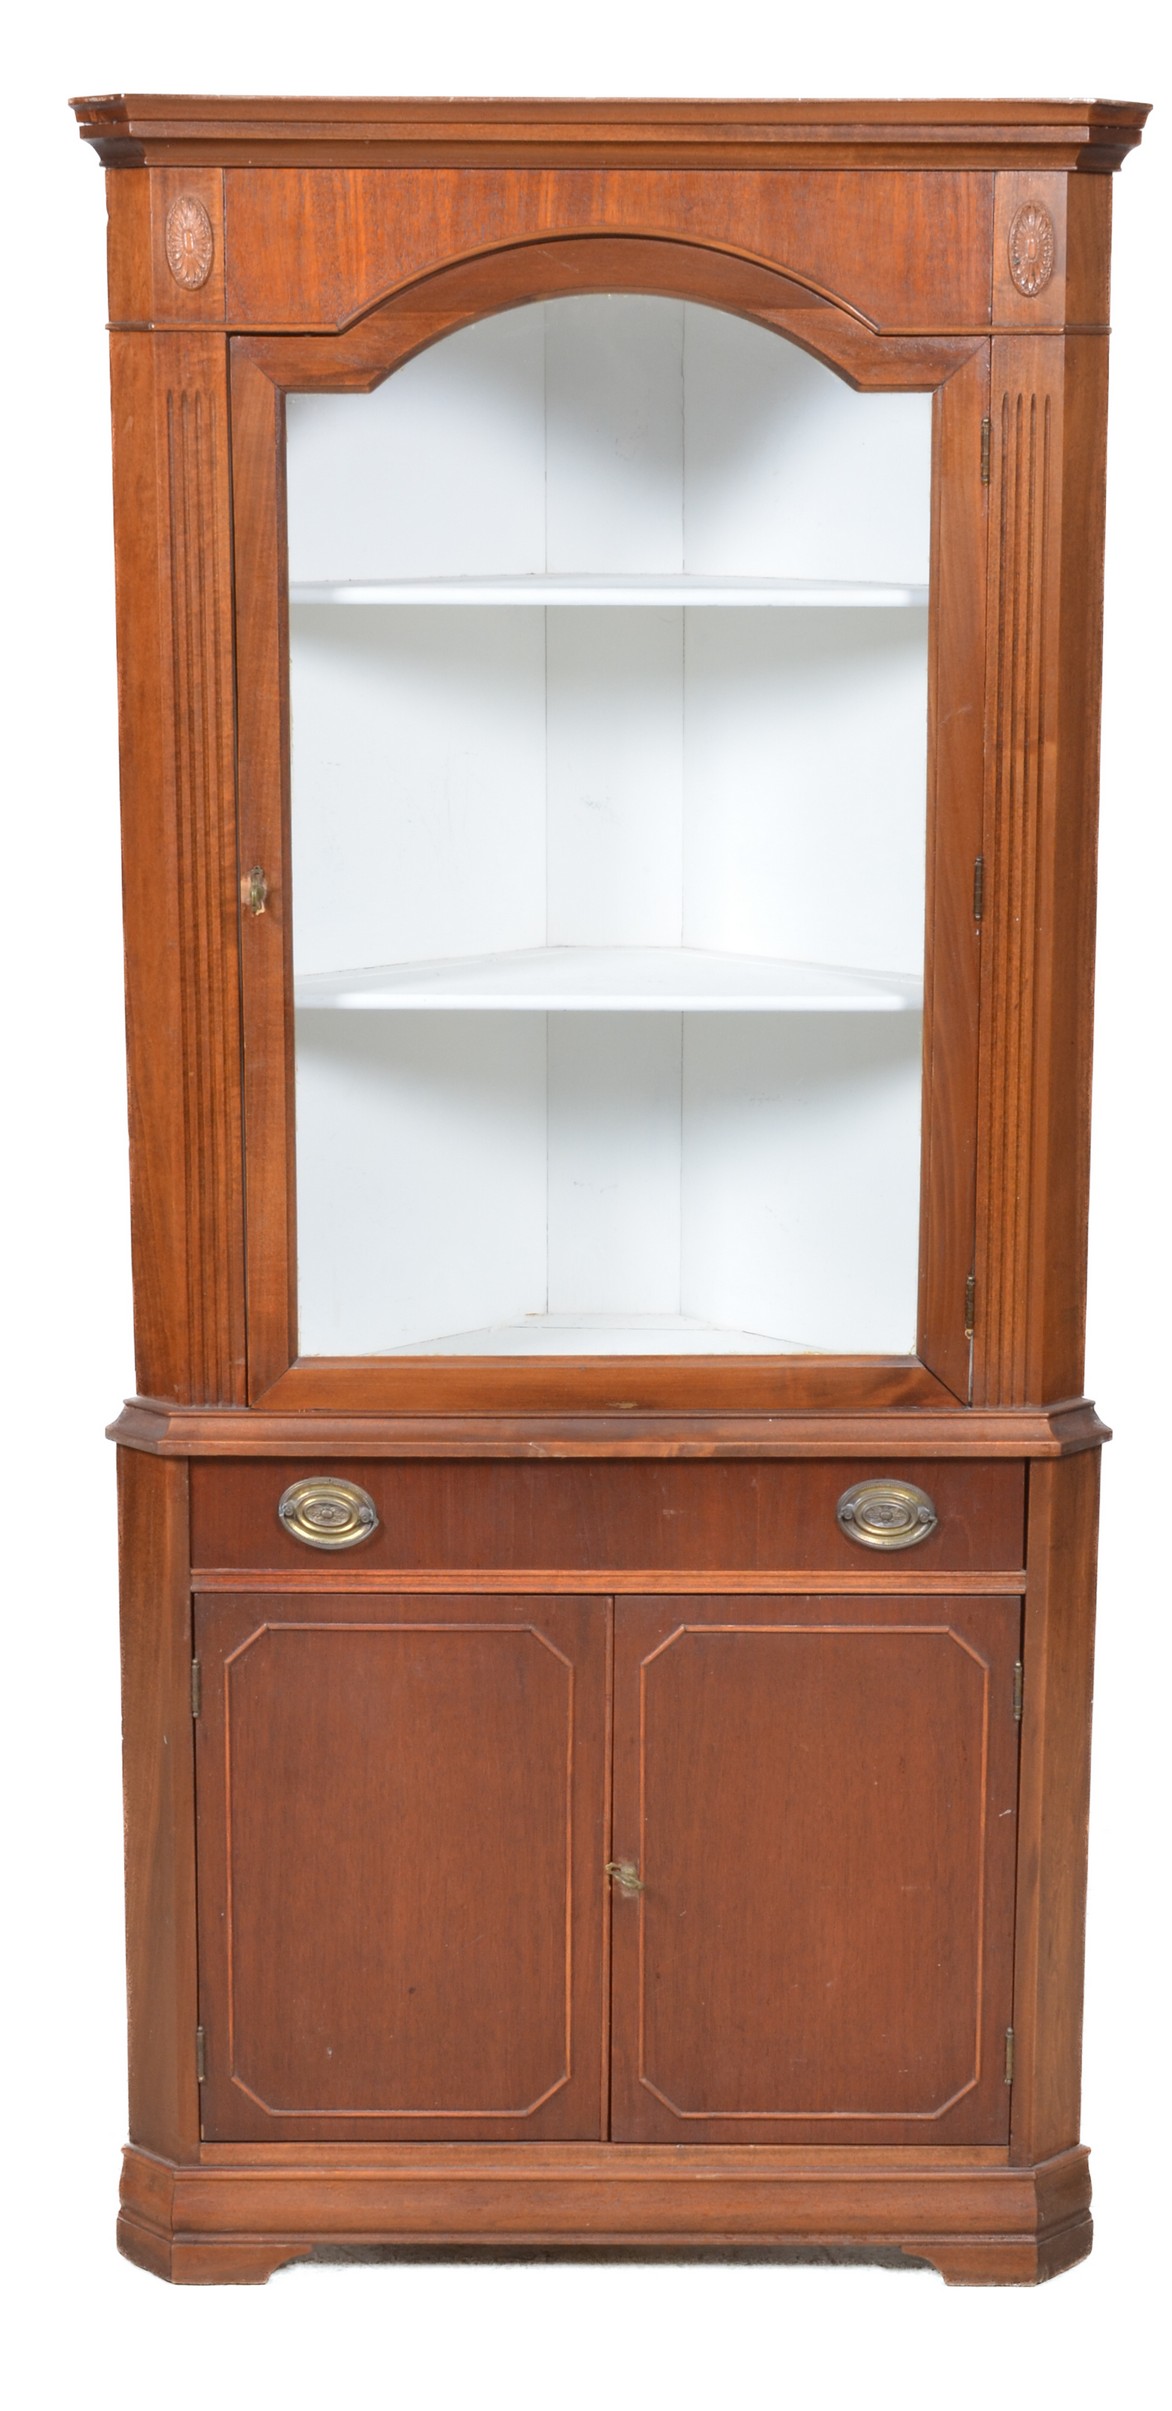 1-pc mahogany corner cabinet, top